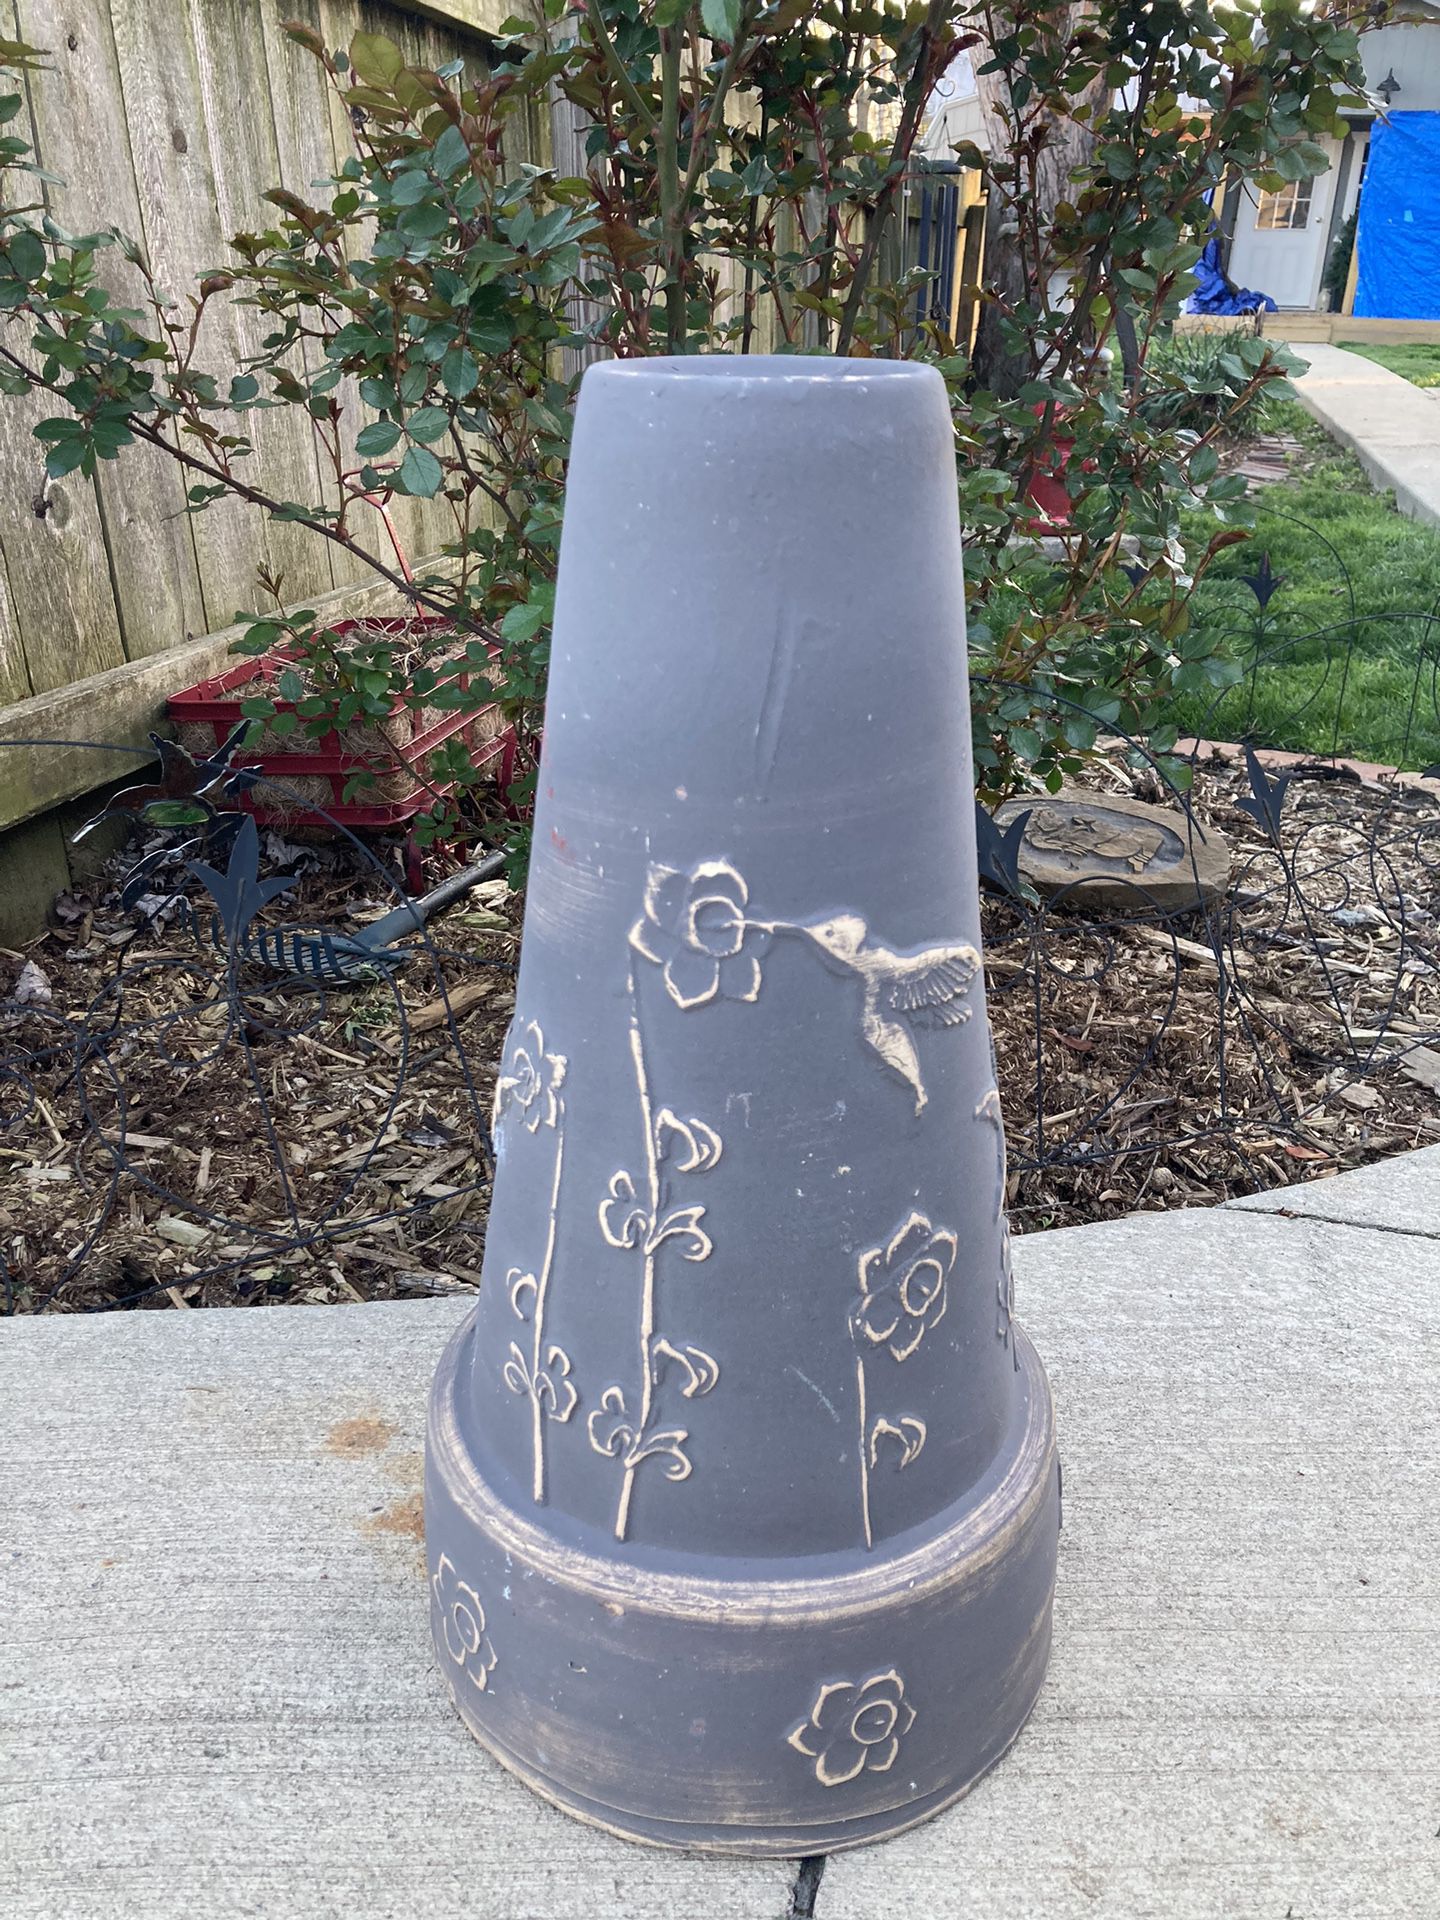 Hummingbird Clay Pedestal - For Gazing Ball or Birdbath Base.